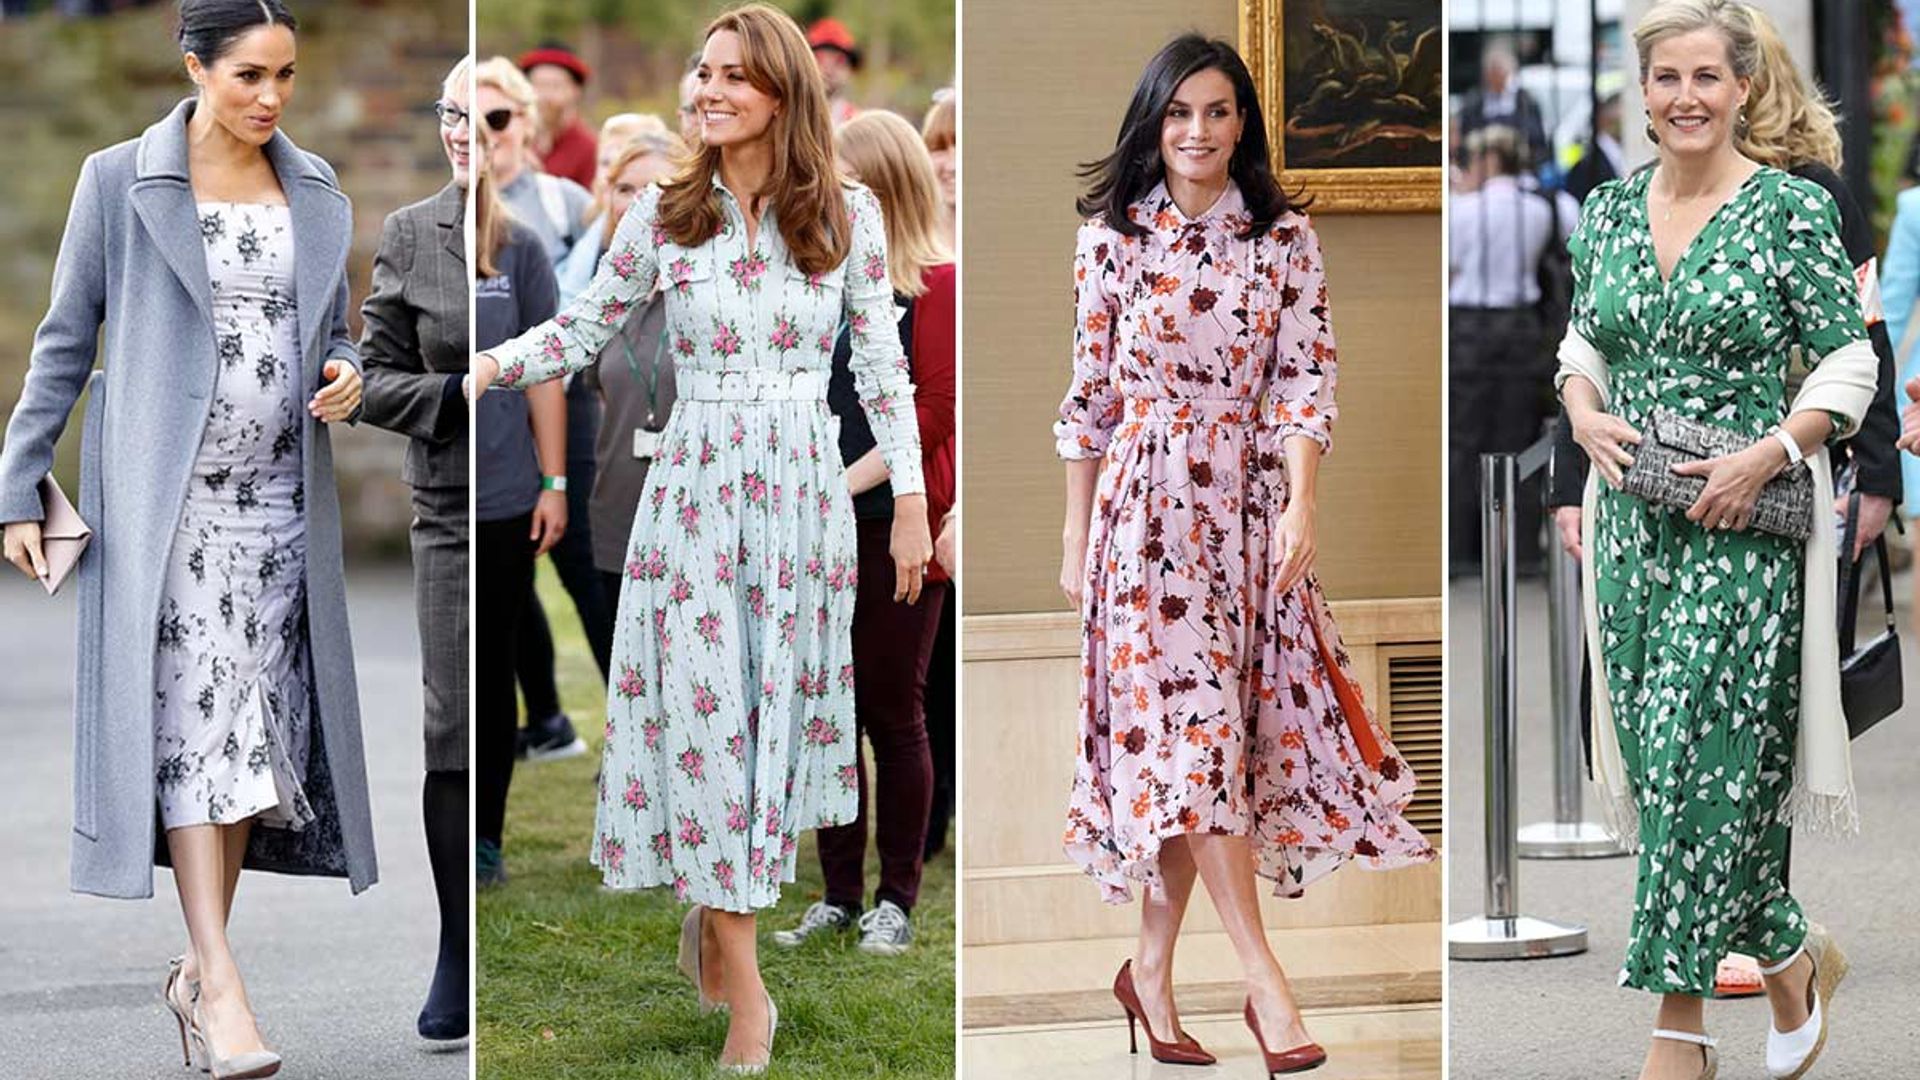 Flower power! Kate Middleton, Meghan Markle and more rocking floral dresses